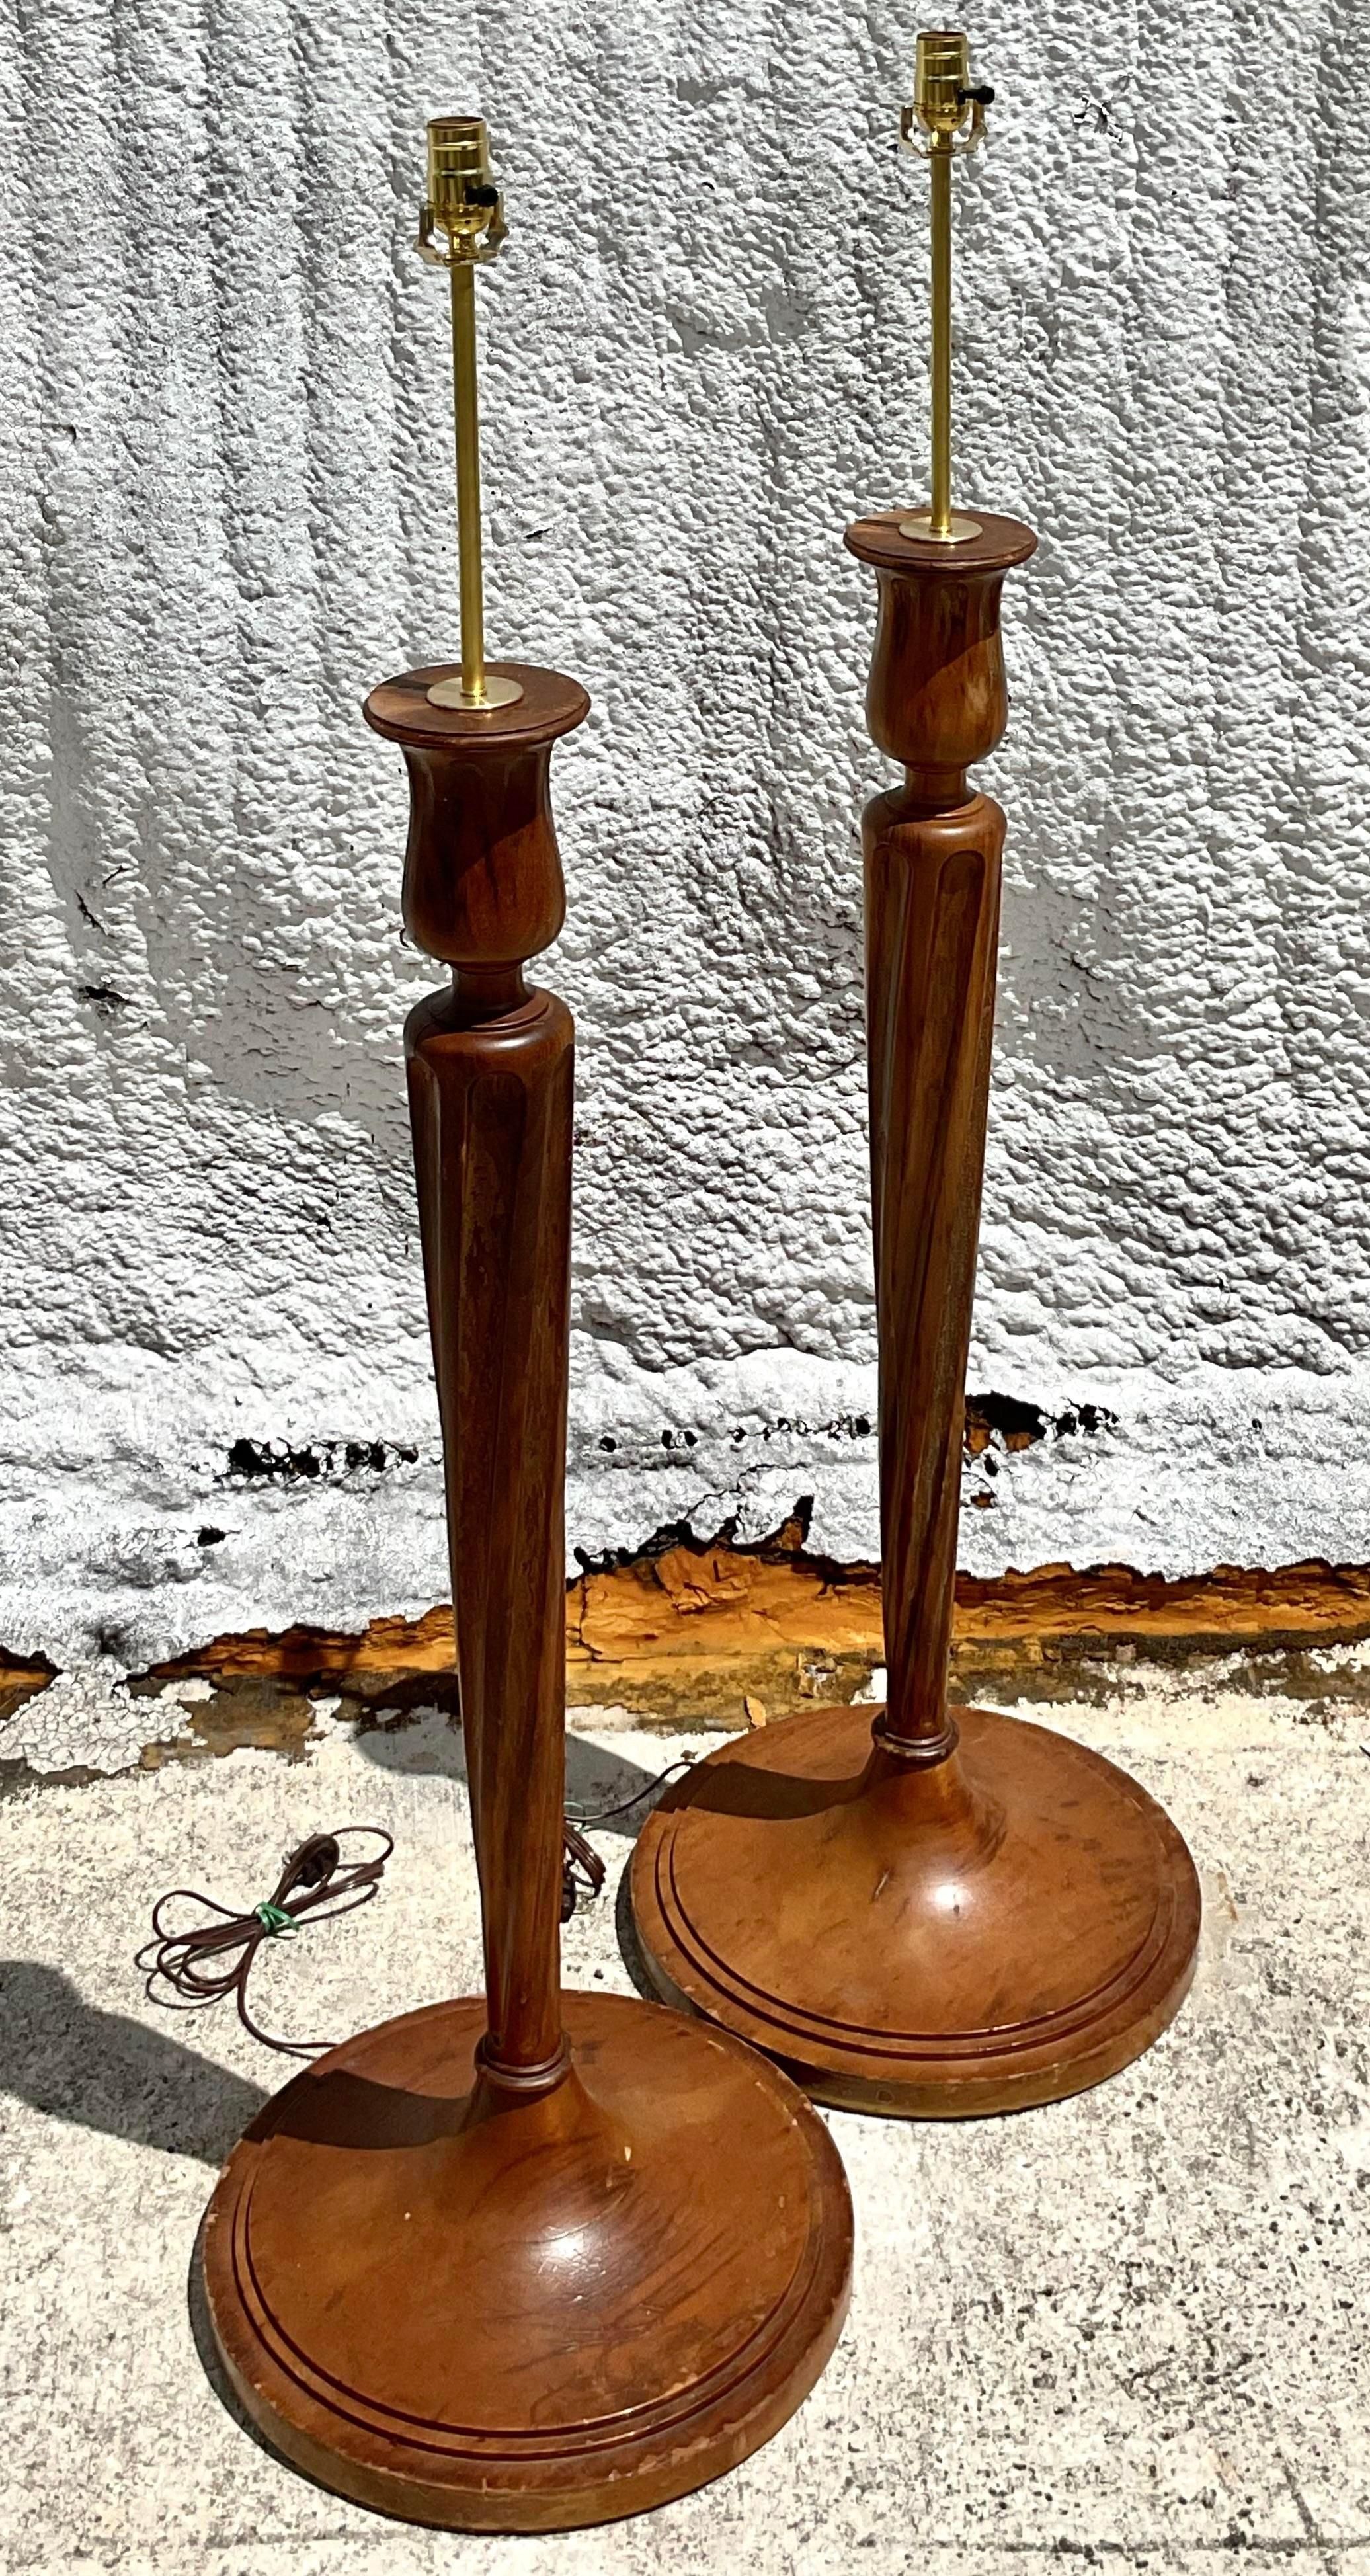 American Vintage Regency Boho Candlestick Wood Floor Lamps - a Pair For Sale